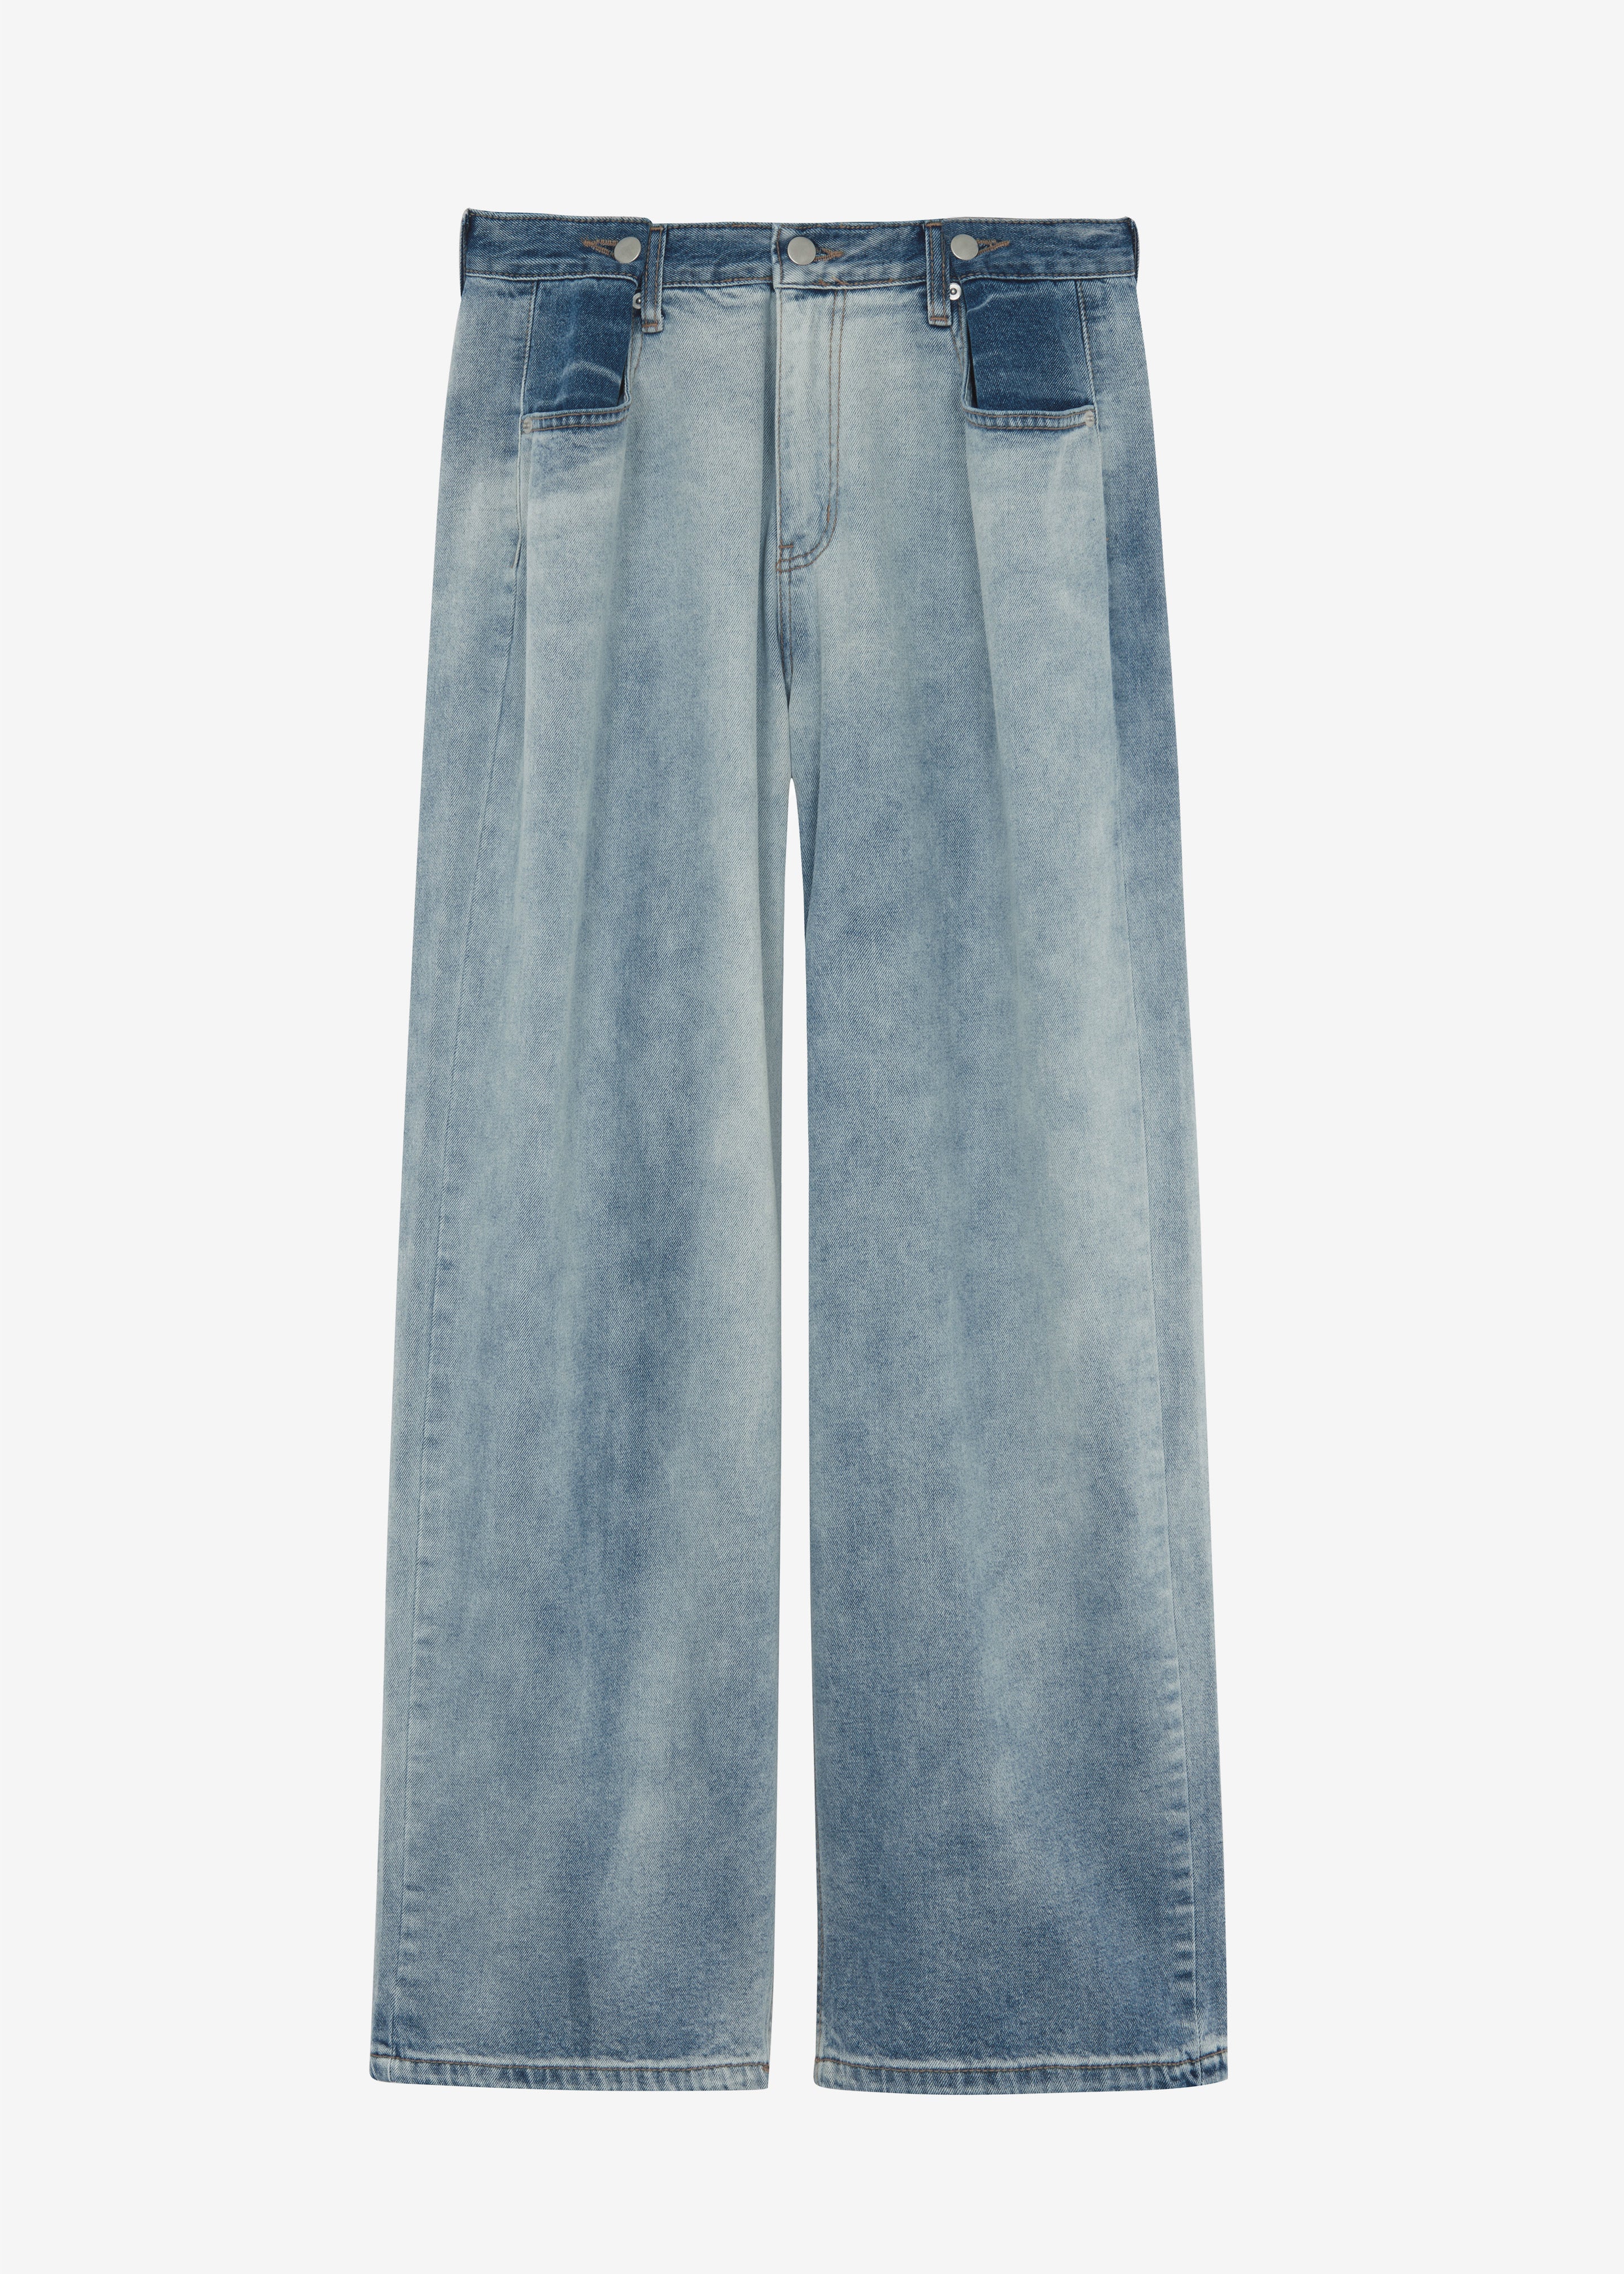 Hayla Contrast Denim Pants - Light Wash/Blue